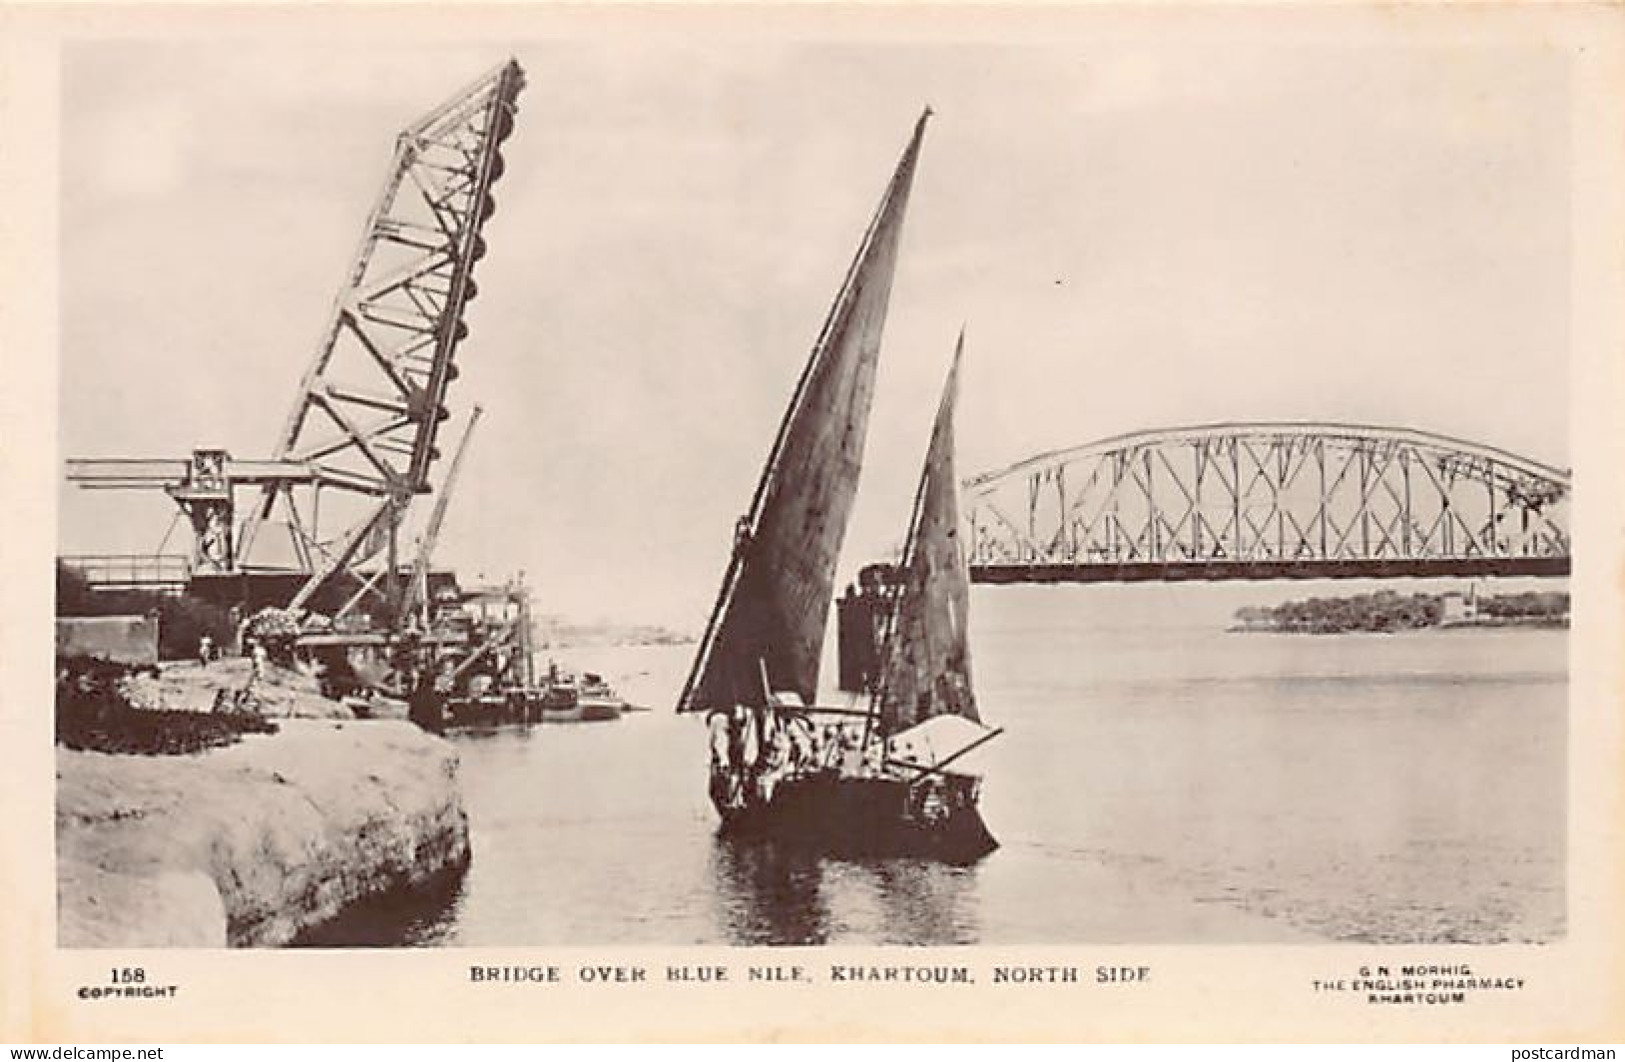 Sudan - KHARTOUM - Bridge Over Blue Nile, North Side - Publ. G. N. Morhig 158 - Sudan